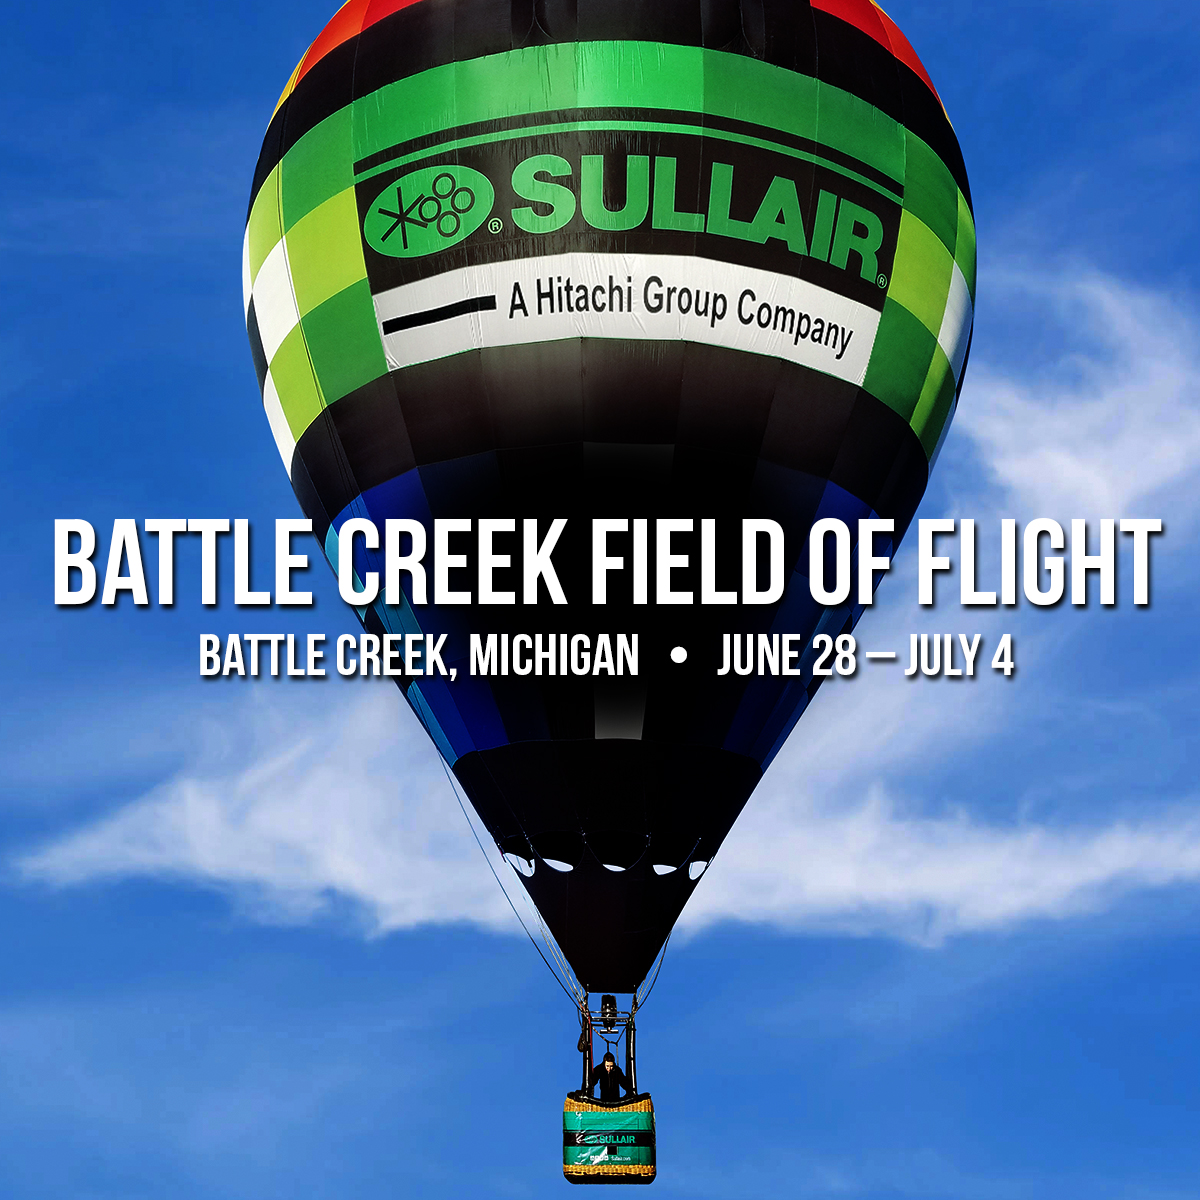 Sullair Balloon at Battle Creek Field of Flight